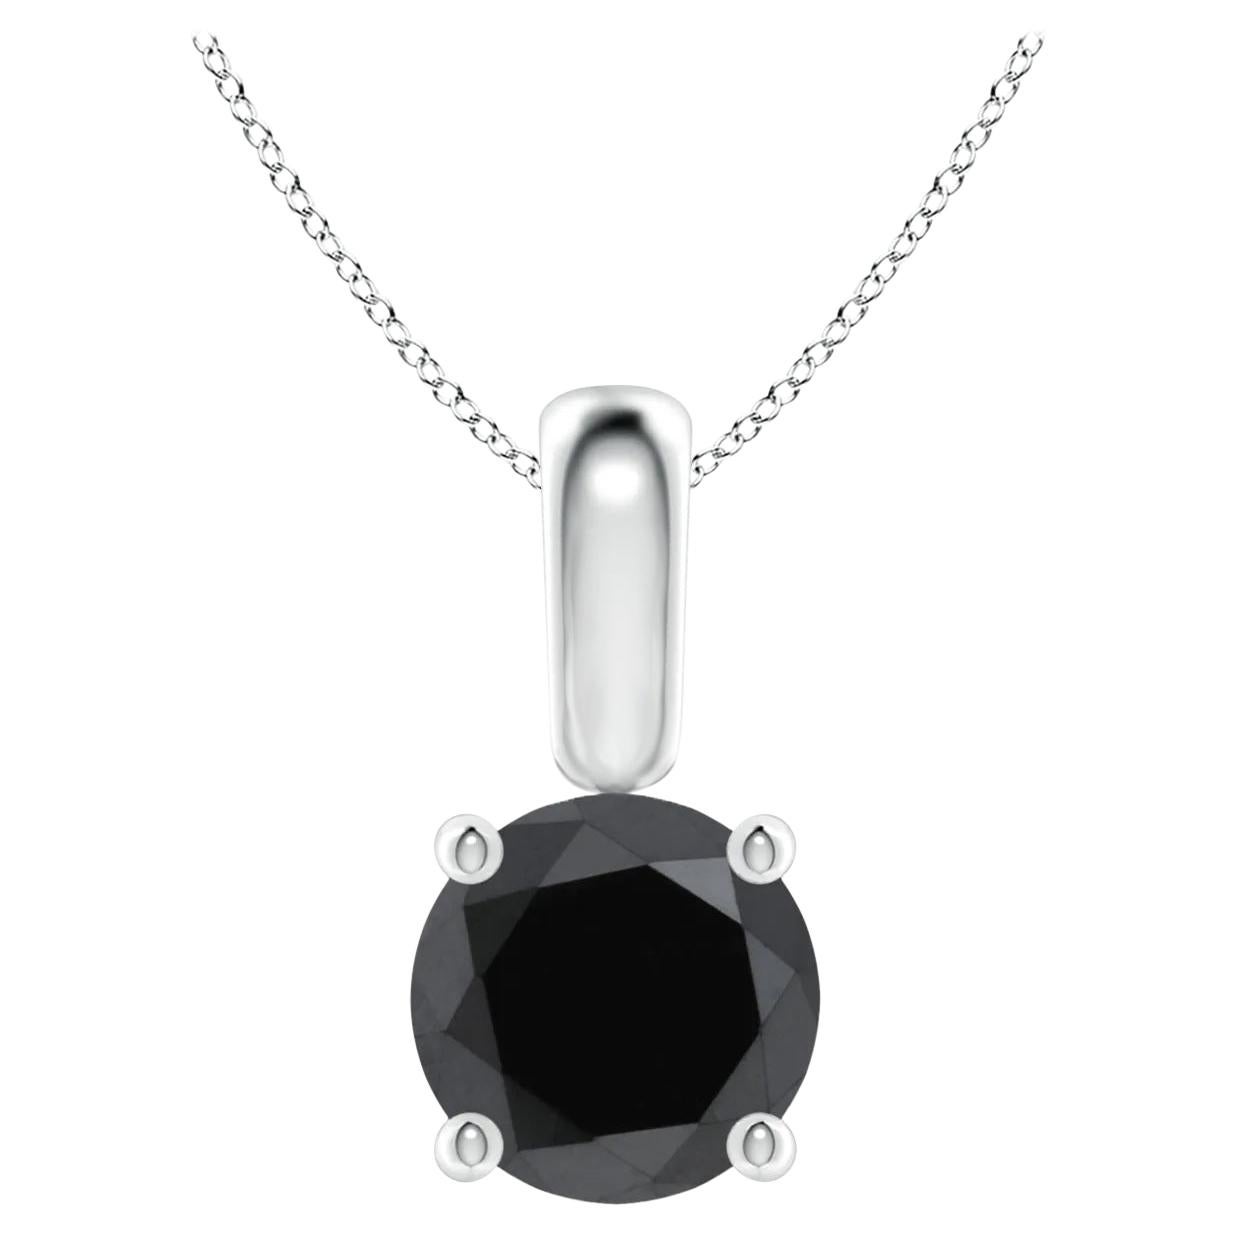 1.64 Carat Round Black Diamond Solitaire Pendant Necklace in 14K White Gold